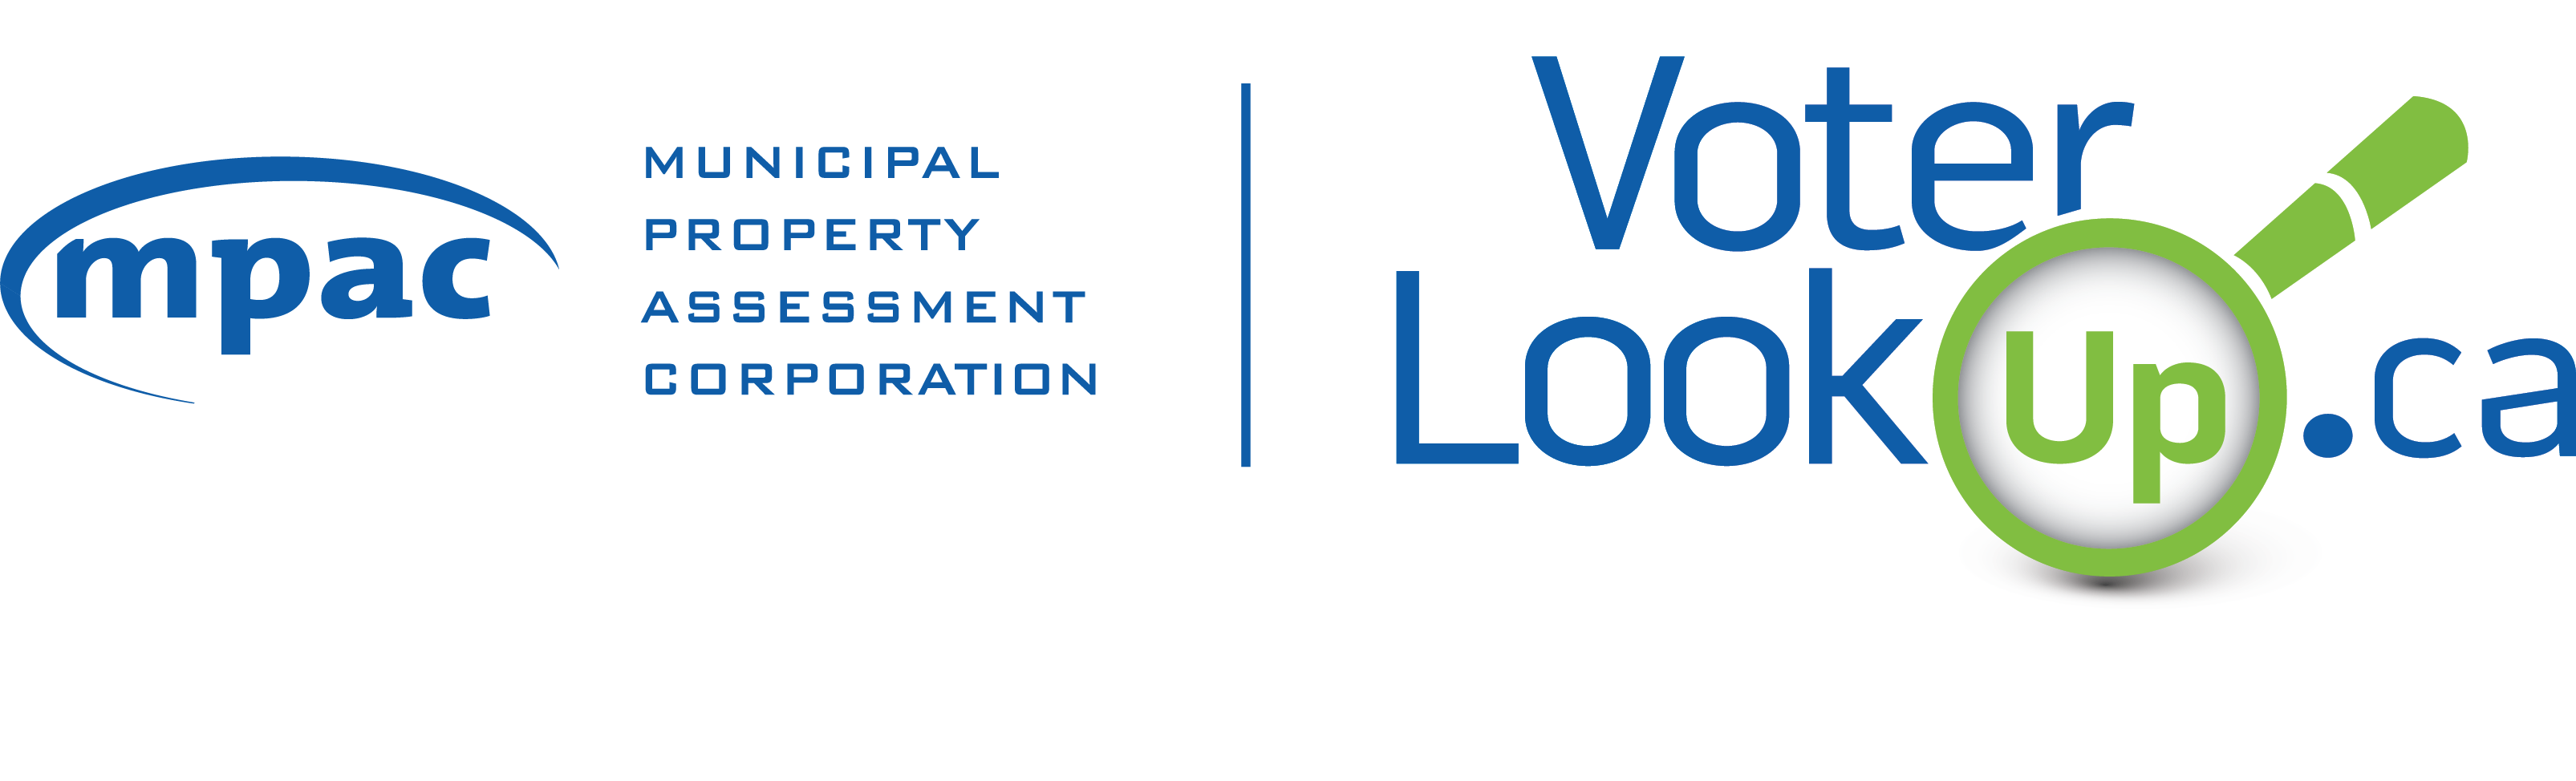 MPAC and Voterlookup.ca logos 